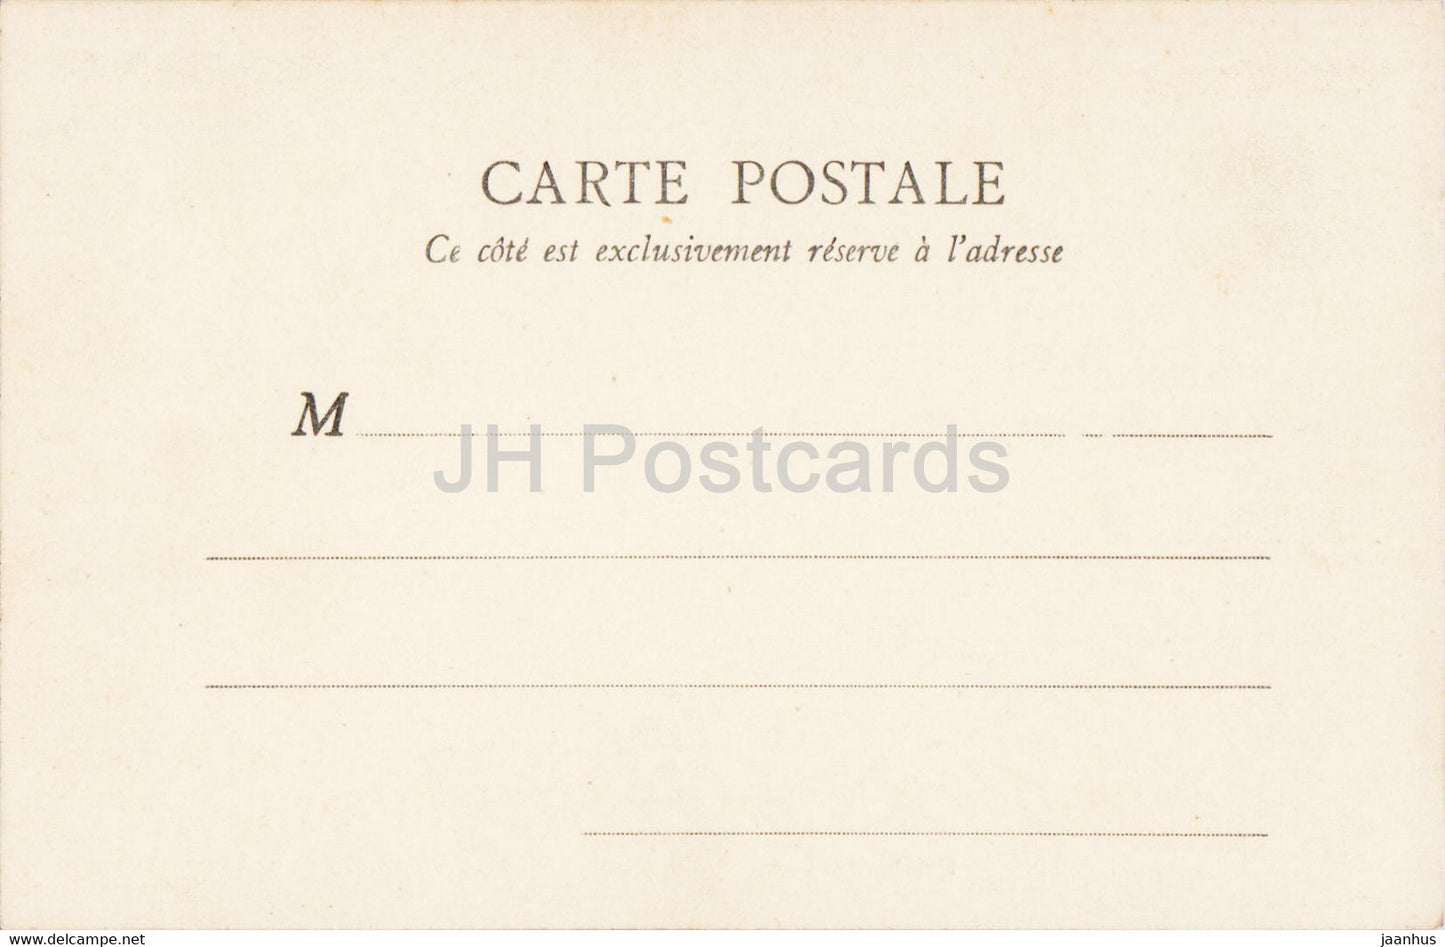 Fontainebleau - Salon du Conseil - old postcard - France - unused